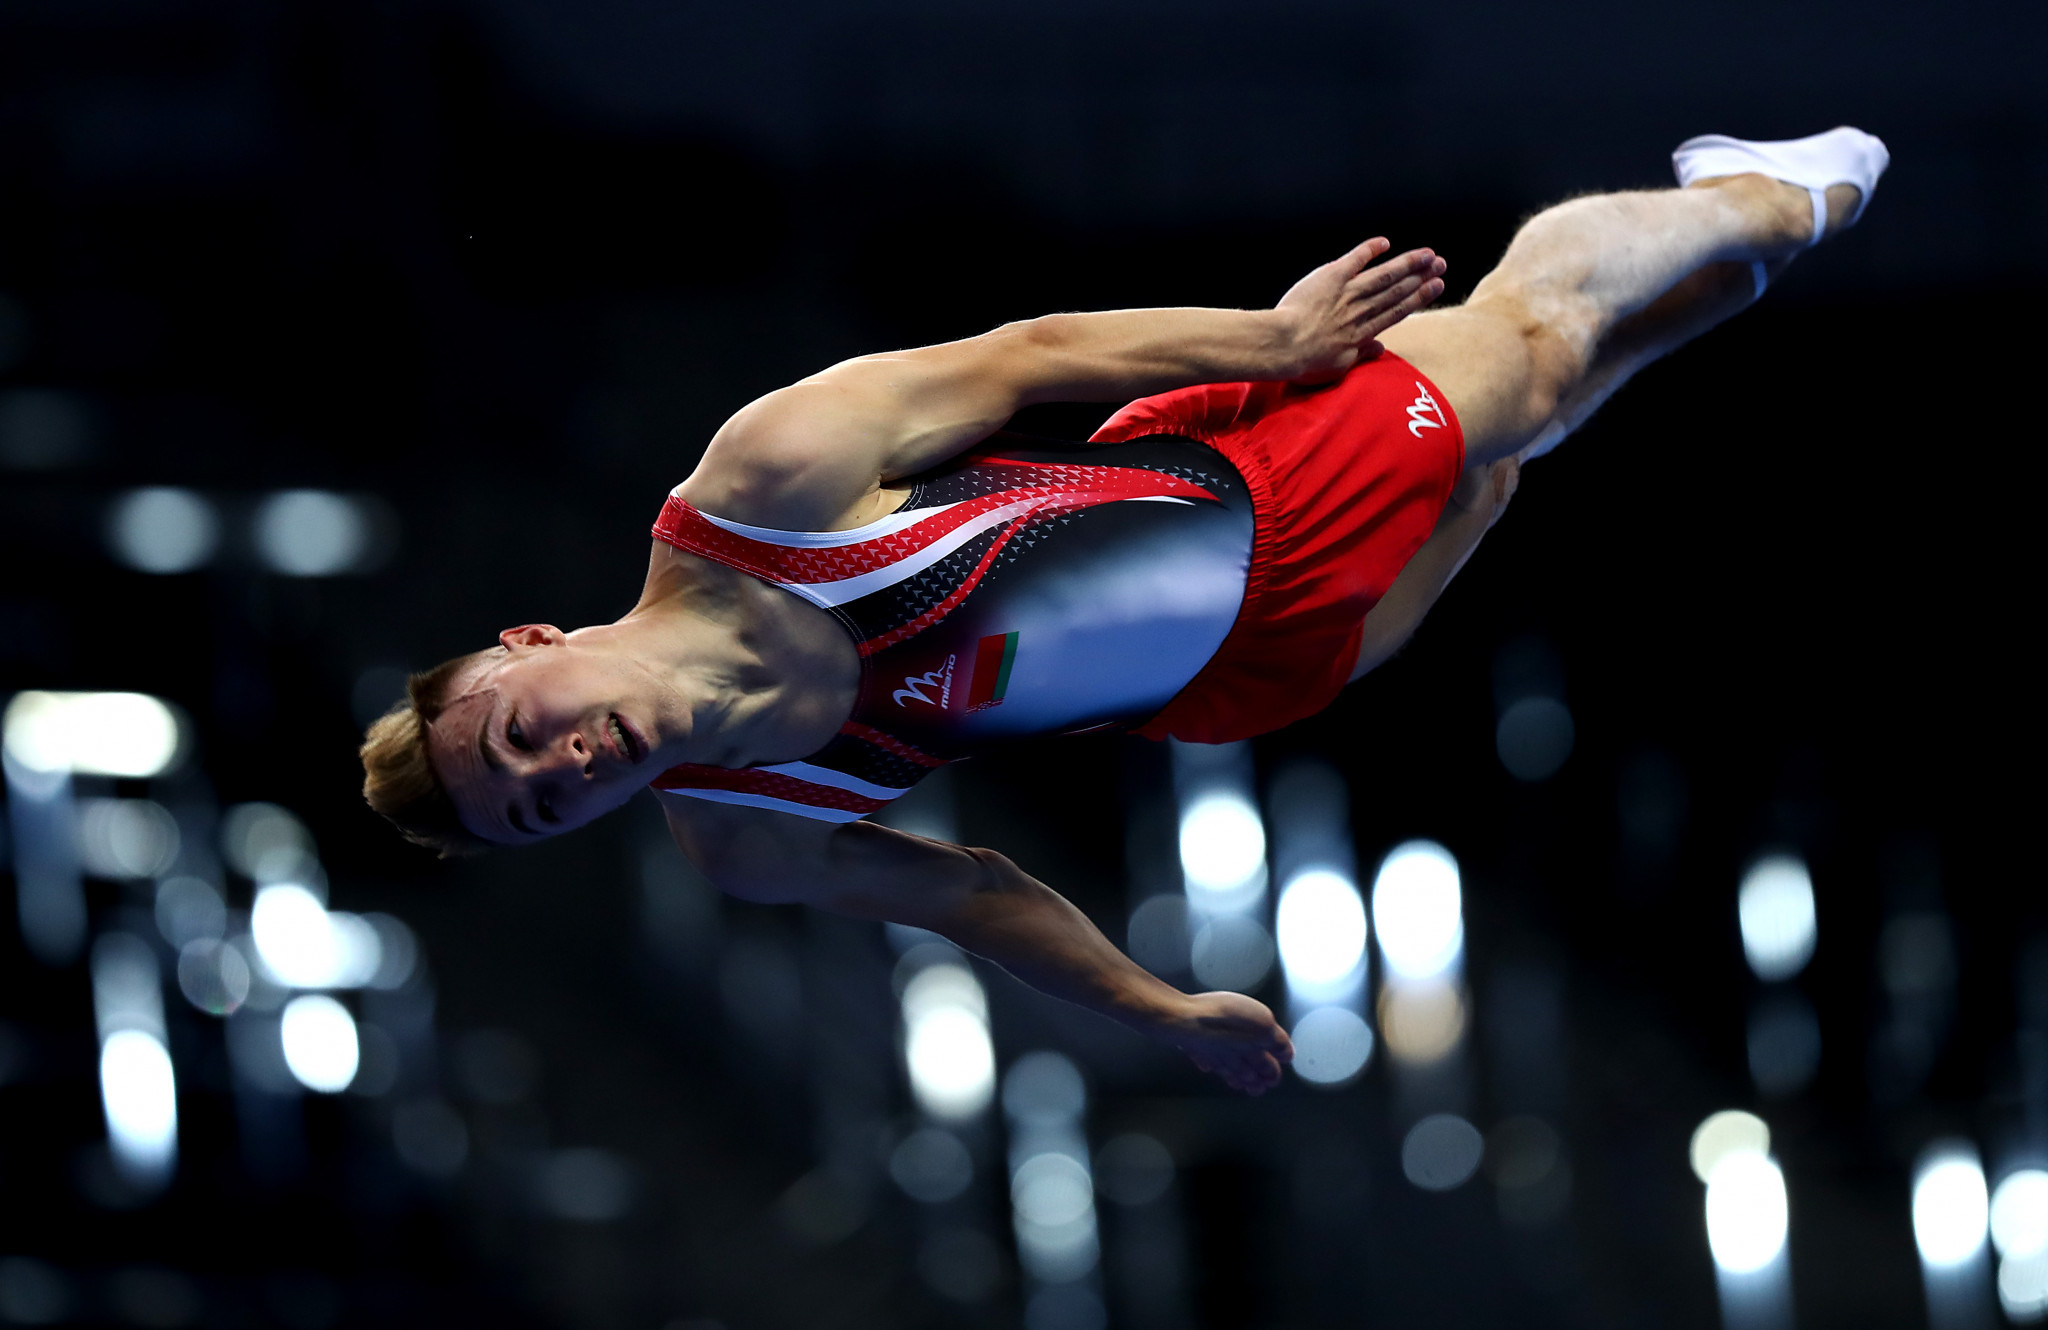 Rio 2016 champion Hancharou earns trampoline gold at European Games